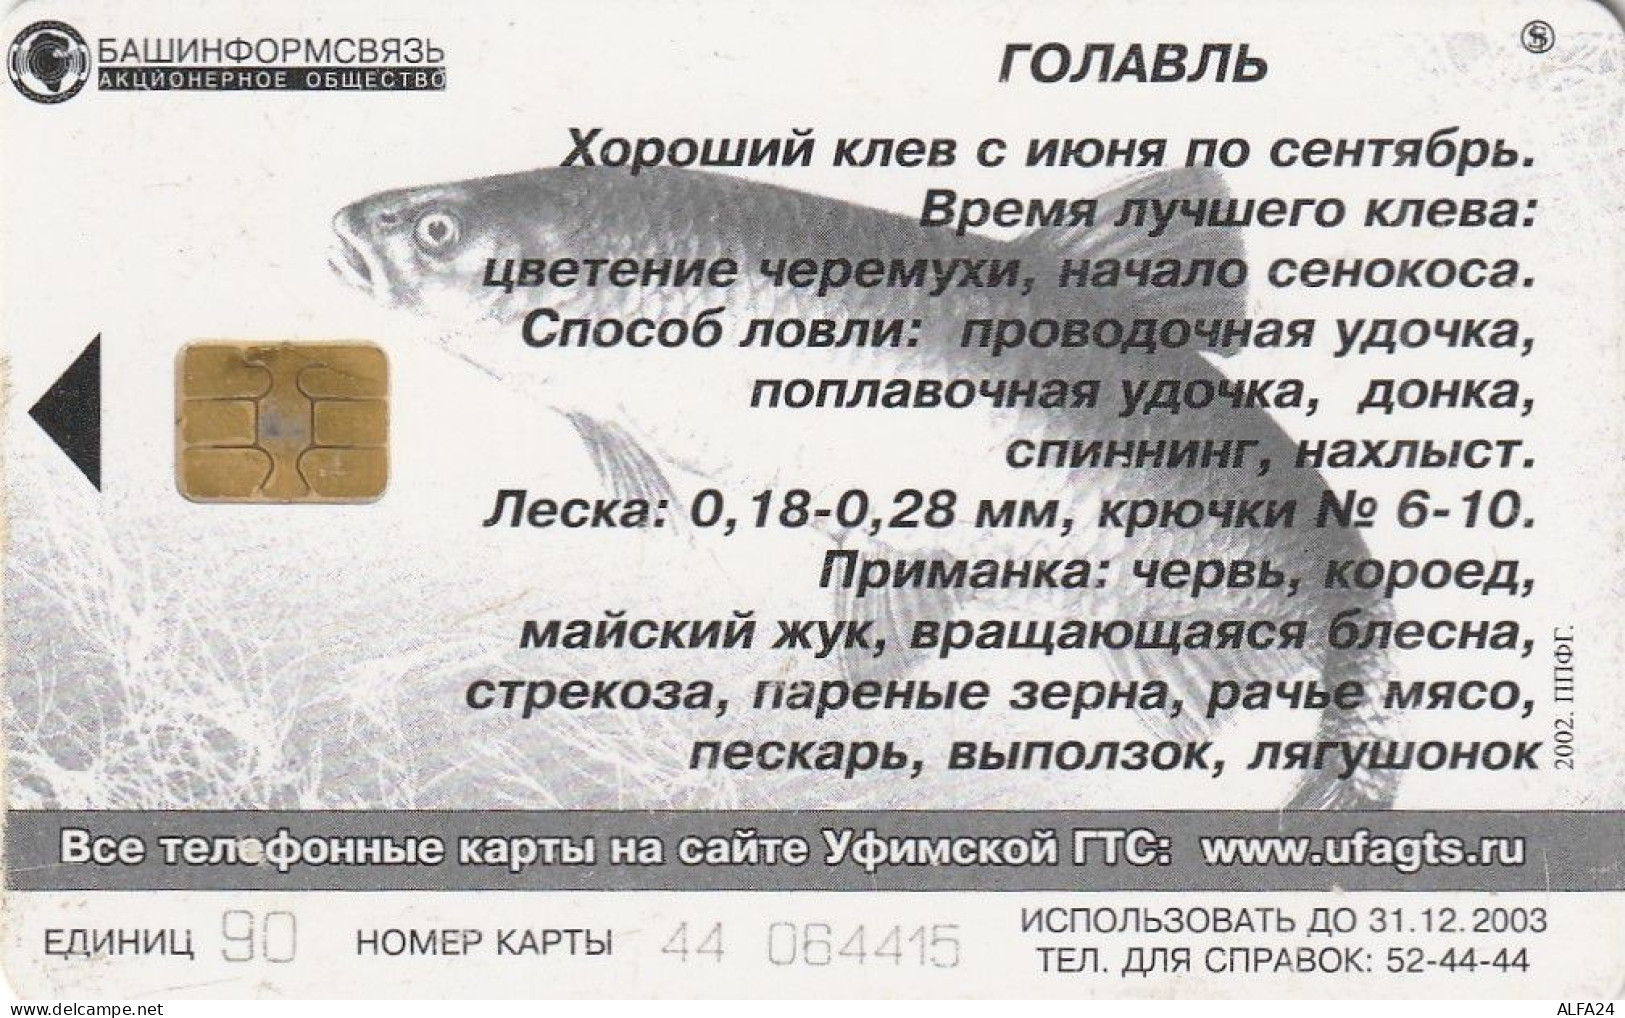 PHONE CARD RUSSIA Bashinformsvyaz - Ufa (E100.7.5 - Rusia